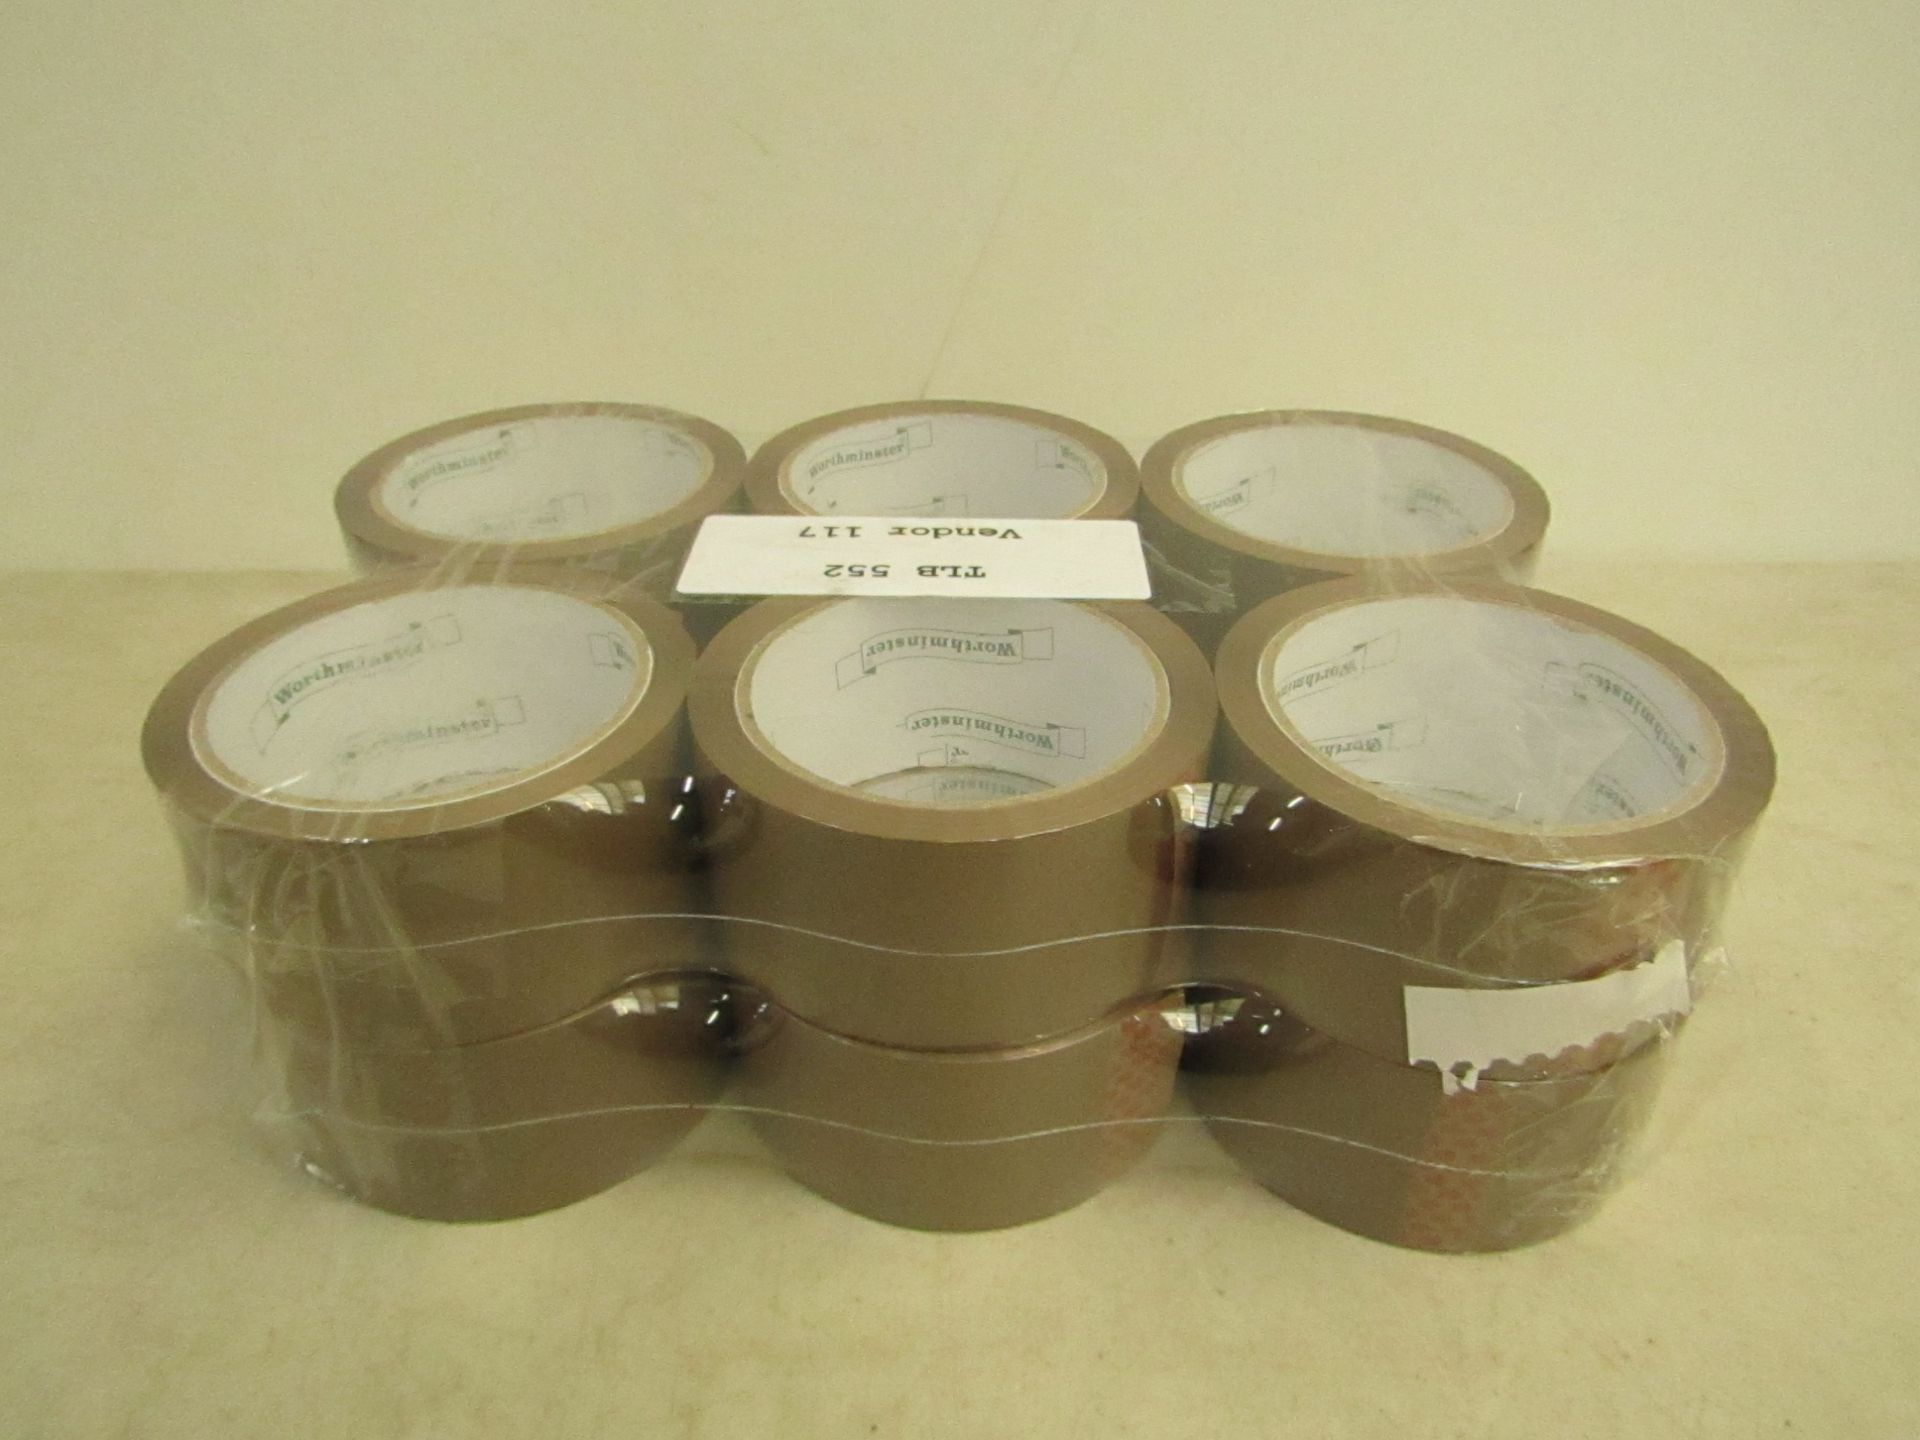 12 rolls of 48mm x 66m brown tape.